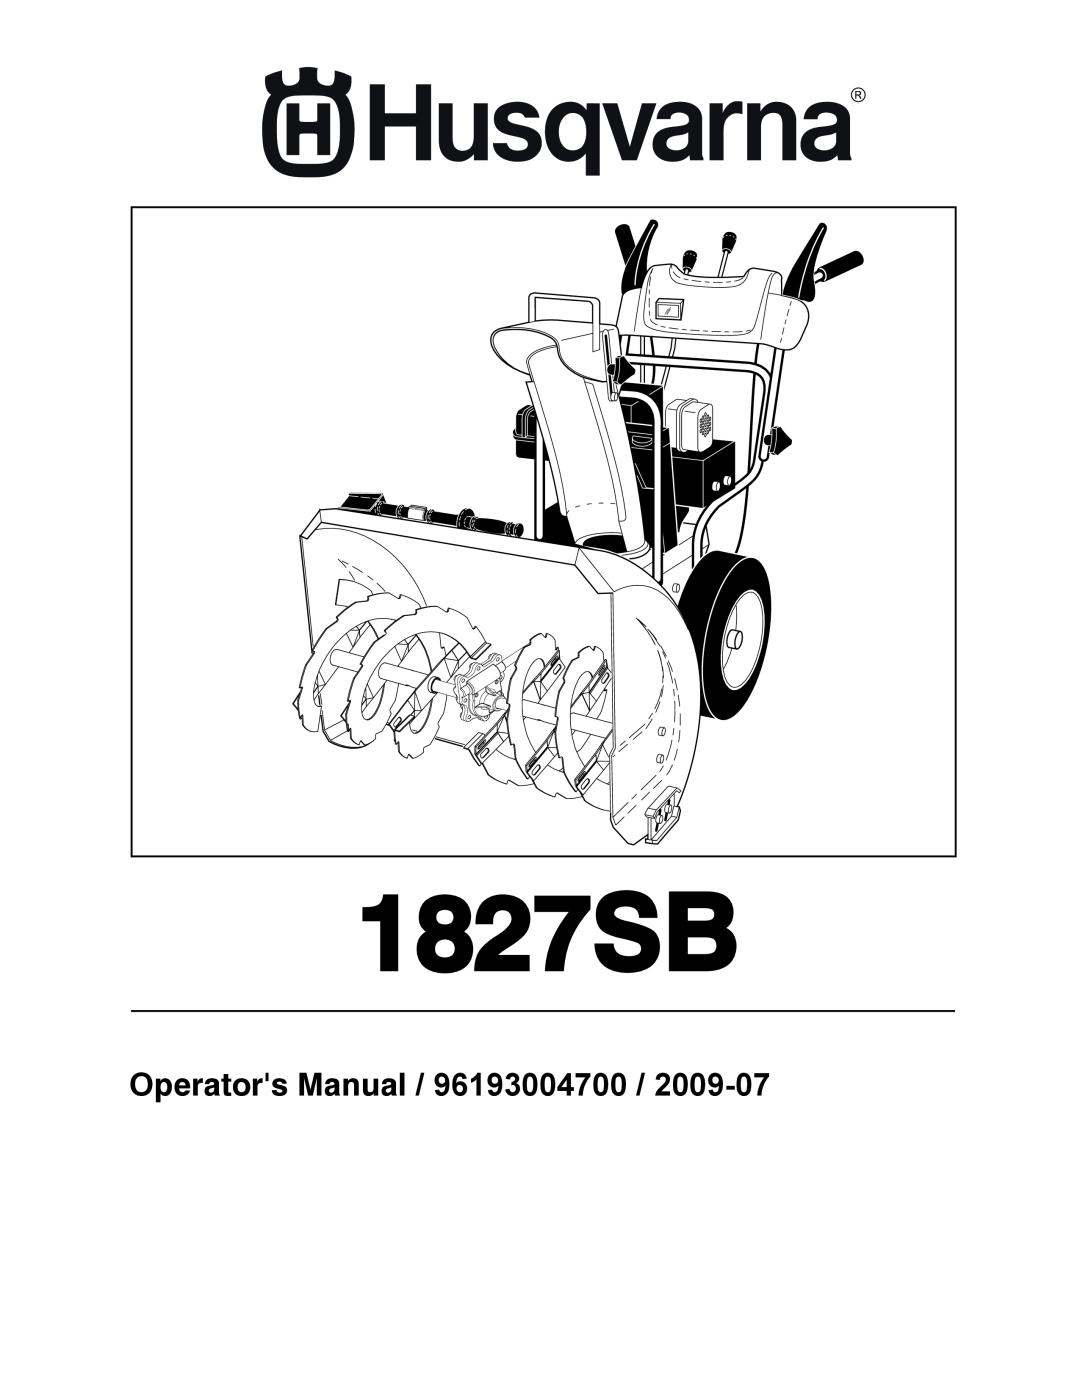 Husqvarna 1827SB manual Operators Manual 